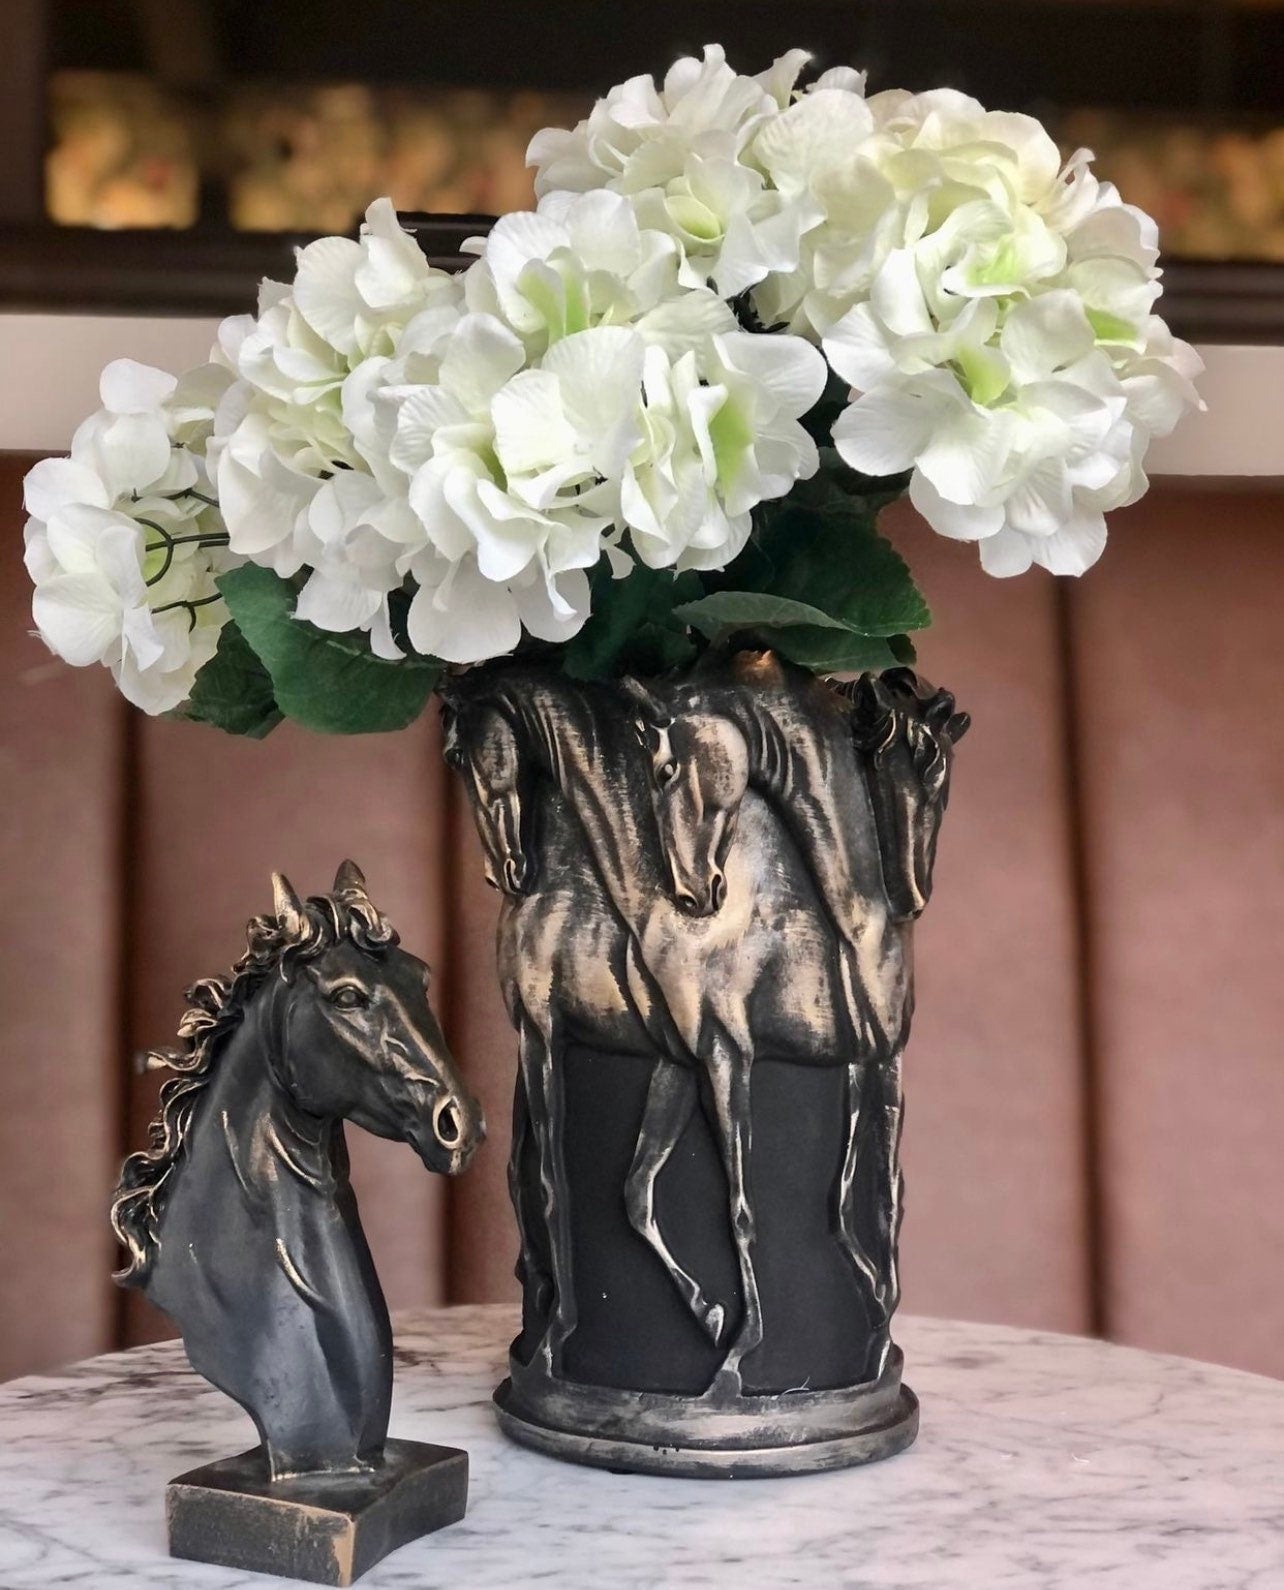 Horse Flowerpot, Horse Statue Vase, Home Decoration, Silver Vase, Horse Sculpture Pot, Horse Planter Mother's Day Gift